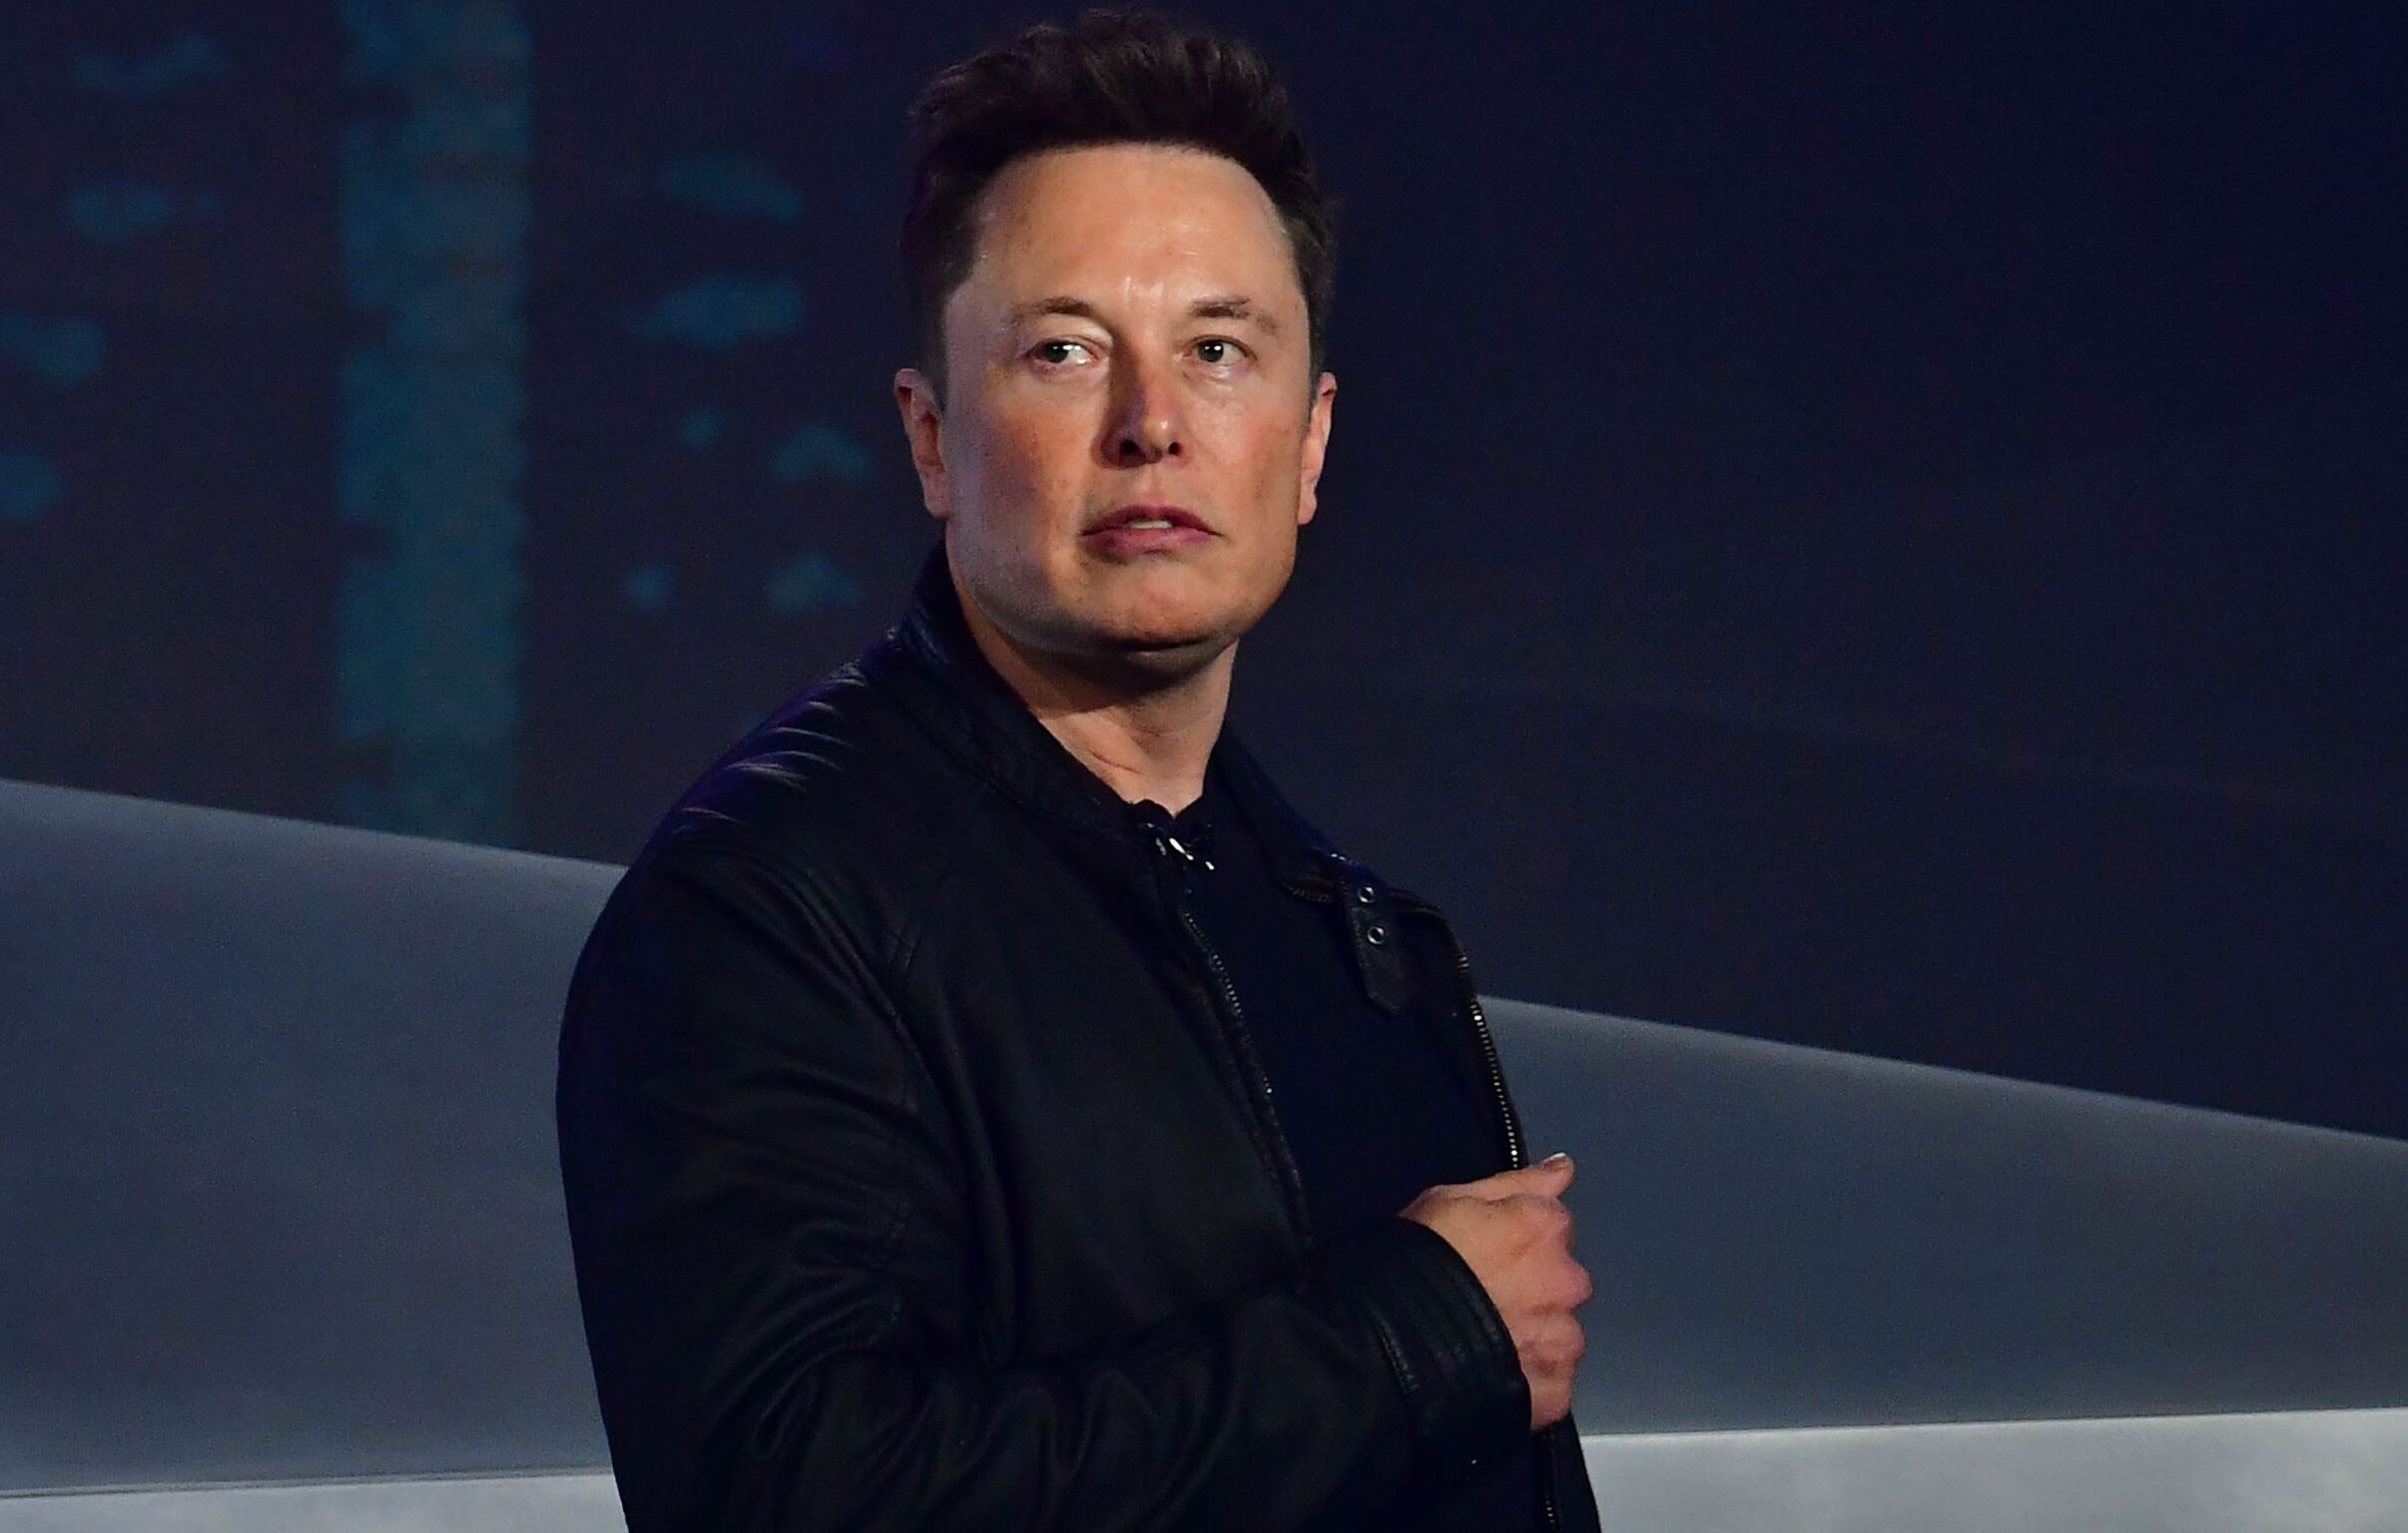 Elon Musk Gives Update on Trump Twitter Ban as He Reinstates Accounts